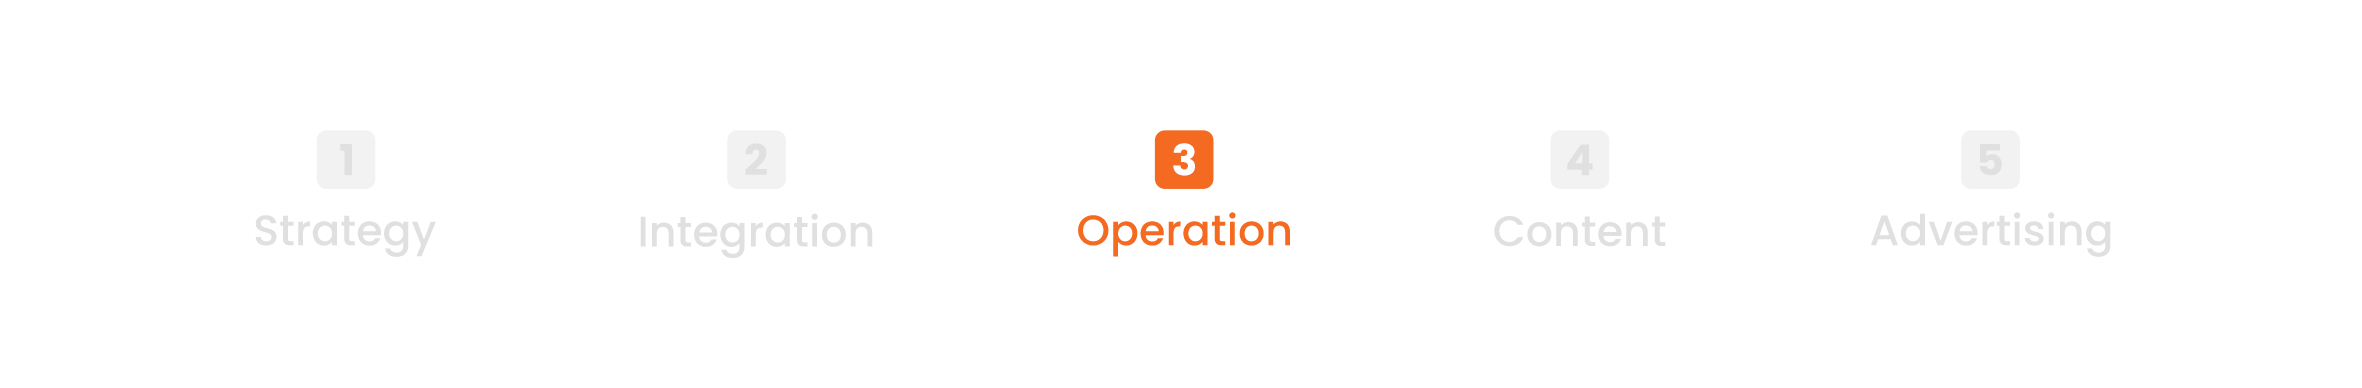 Operation (3) [3]